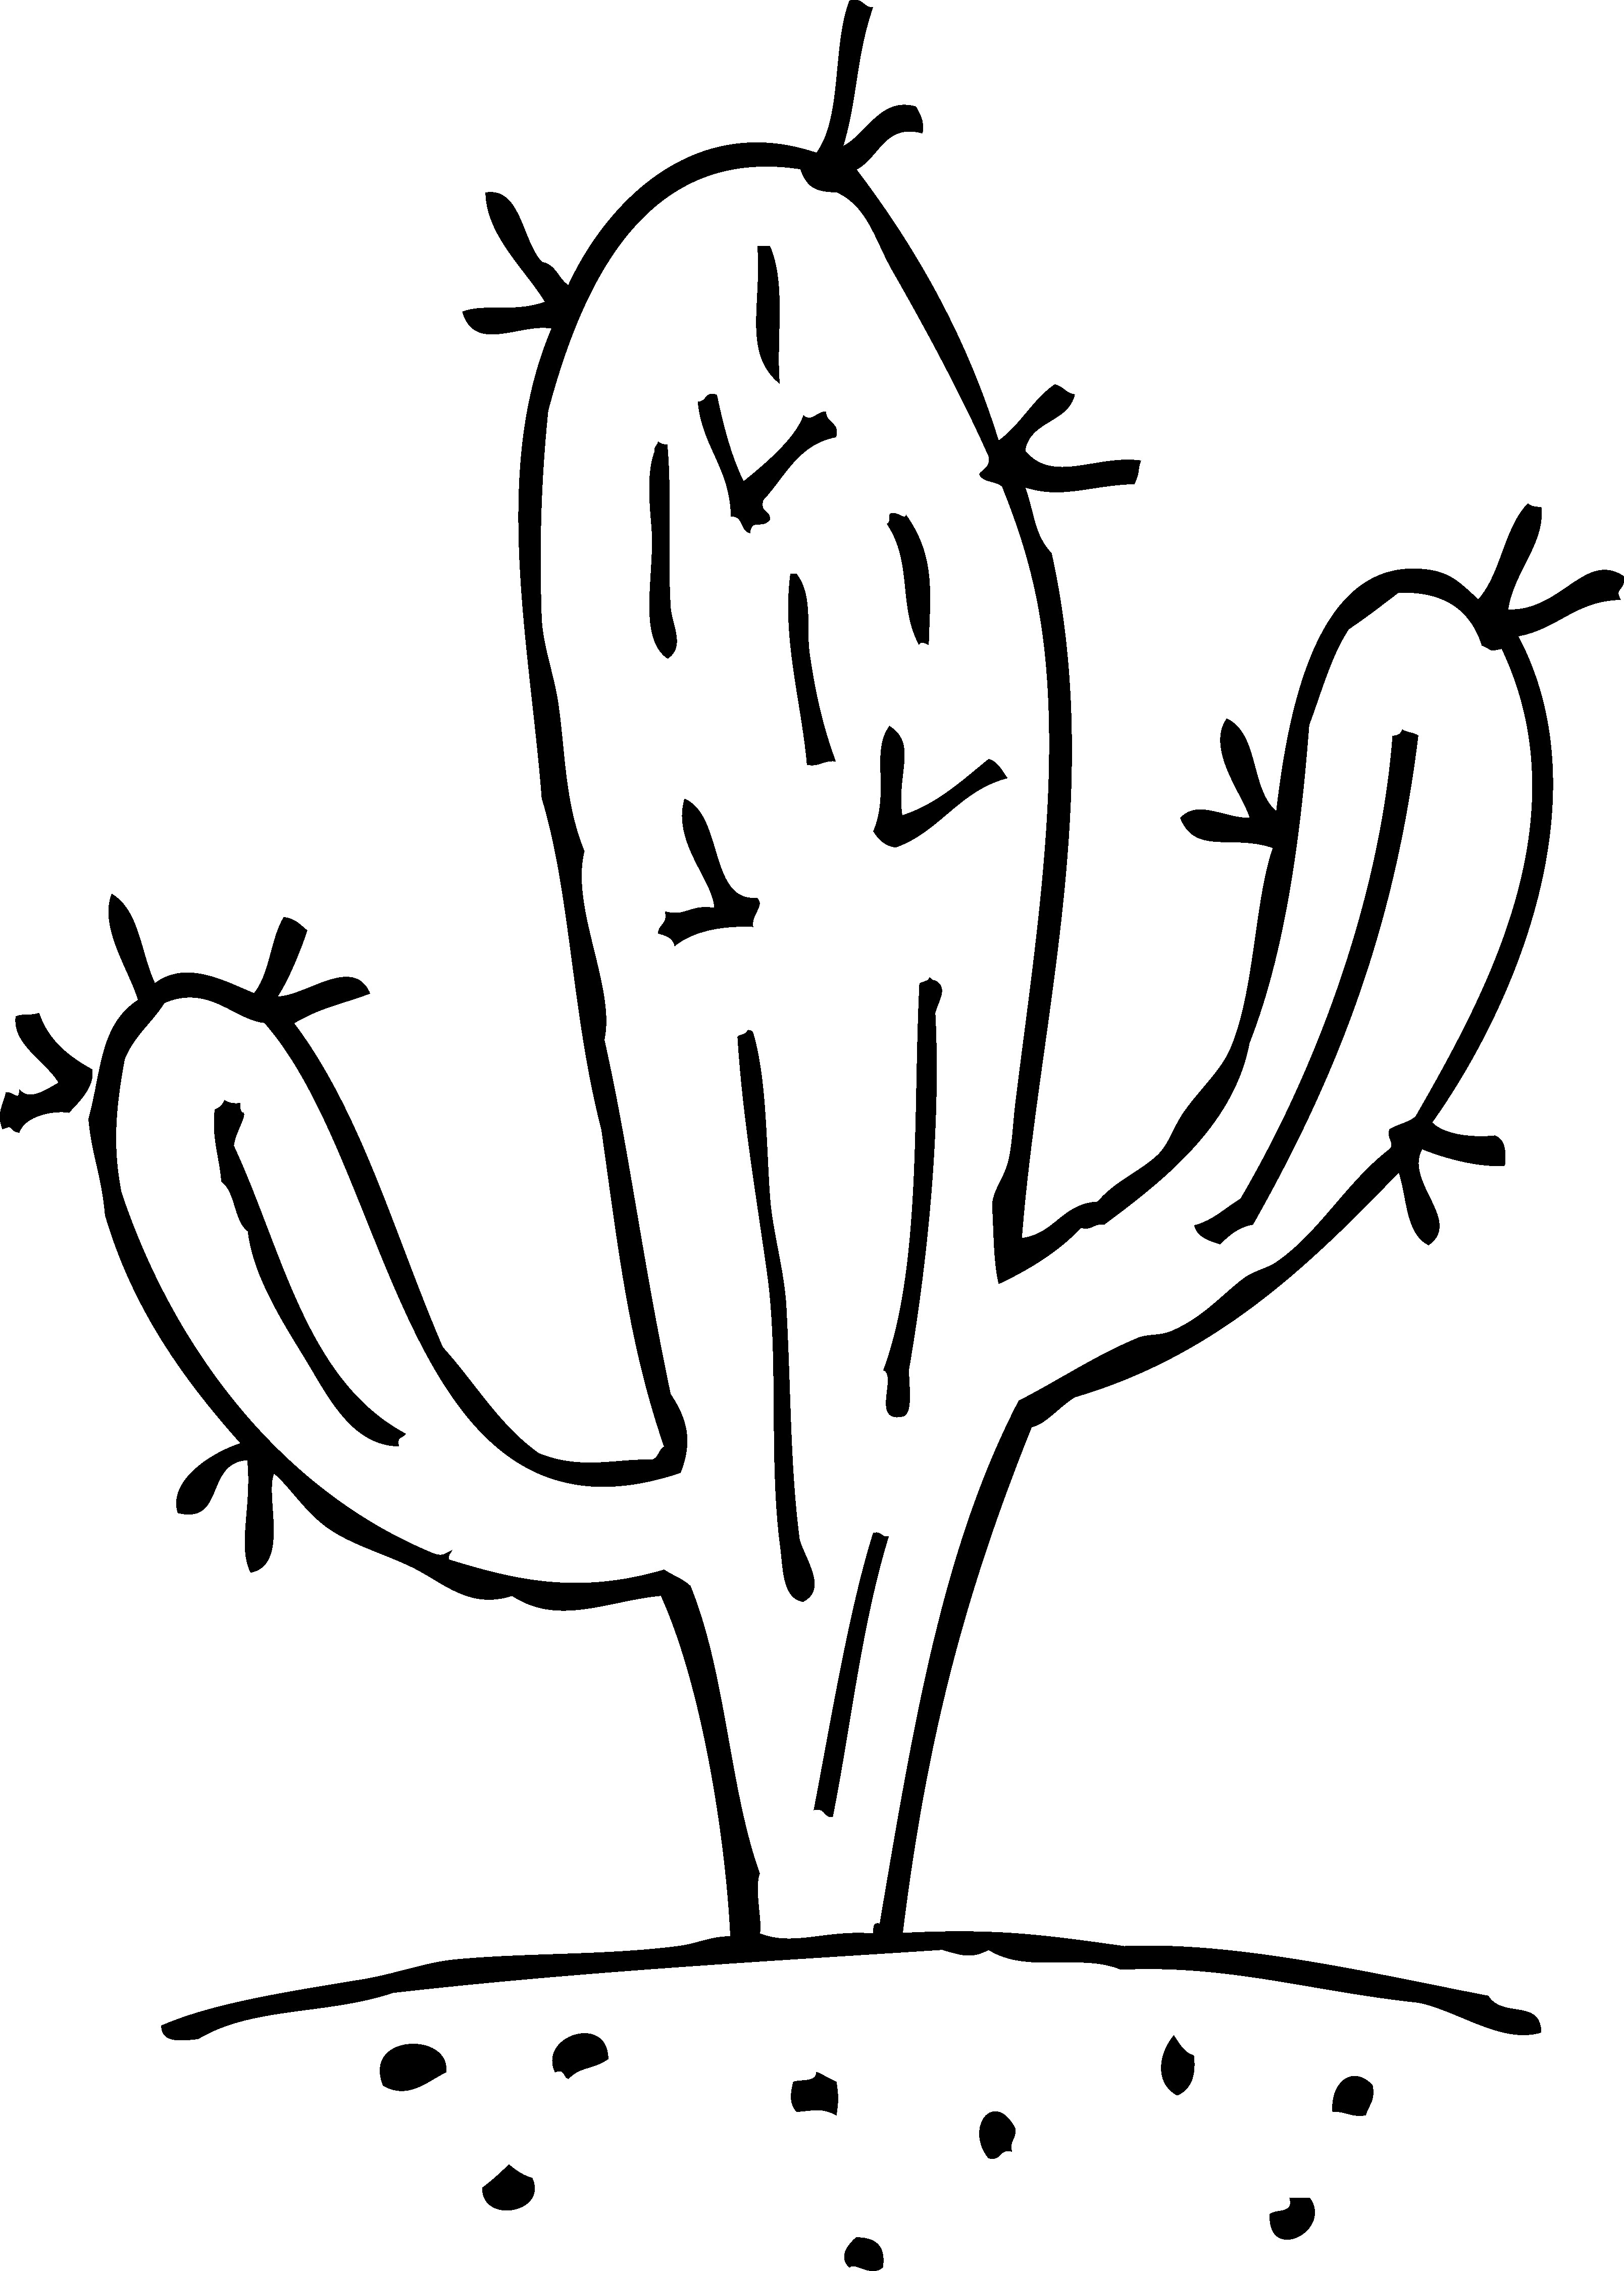 Free Cactus Cliparts, Download Free Clip Art, Free Clip Art